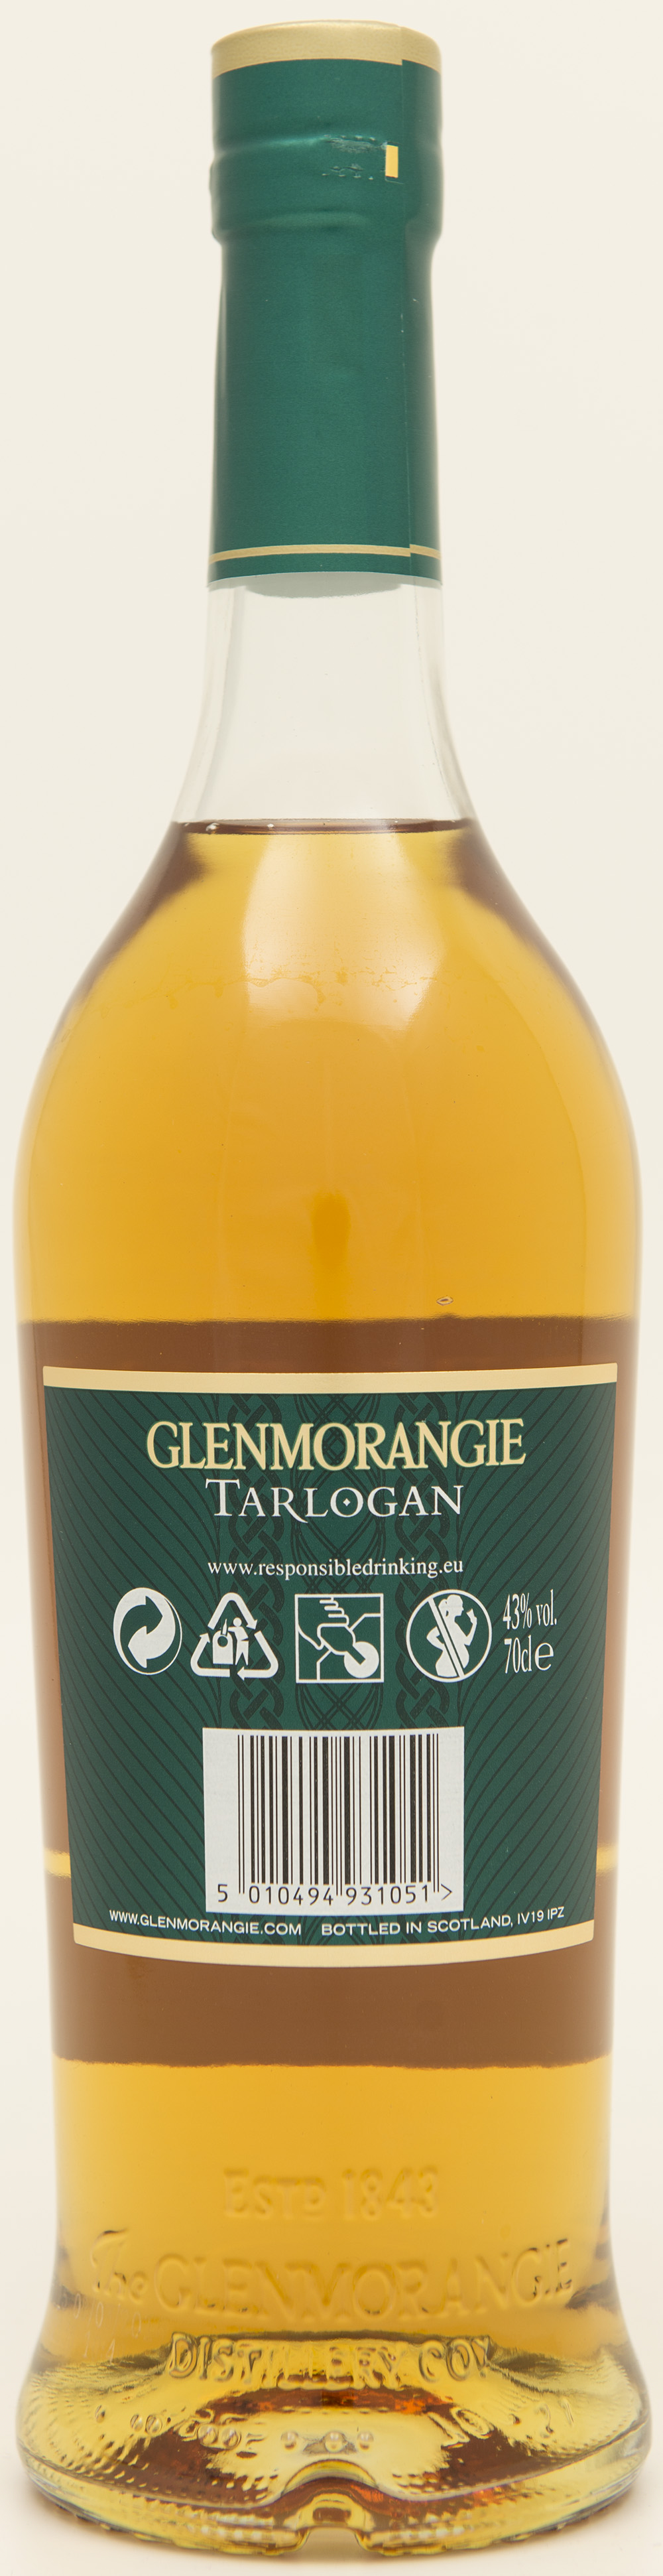 Billede: DSC_1161 - Glenmorangie The Tarlogan - bottle back.jpg